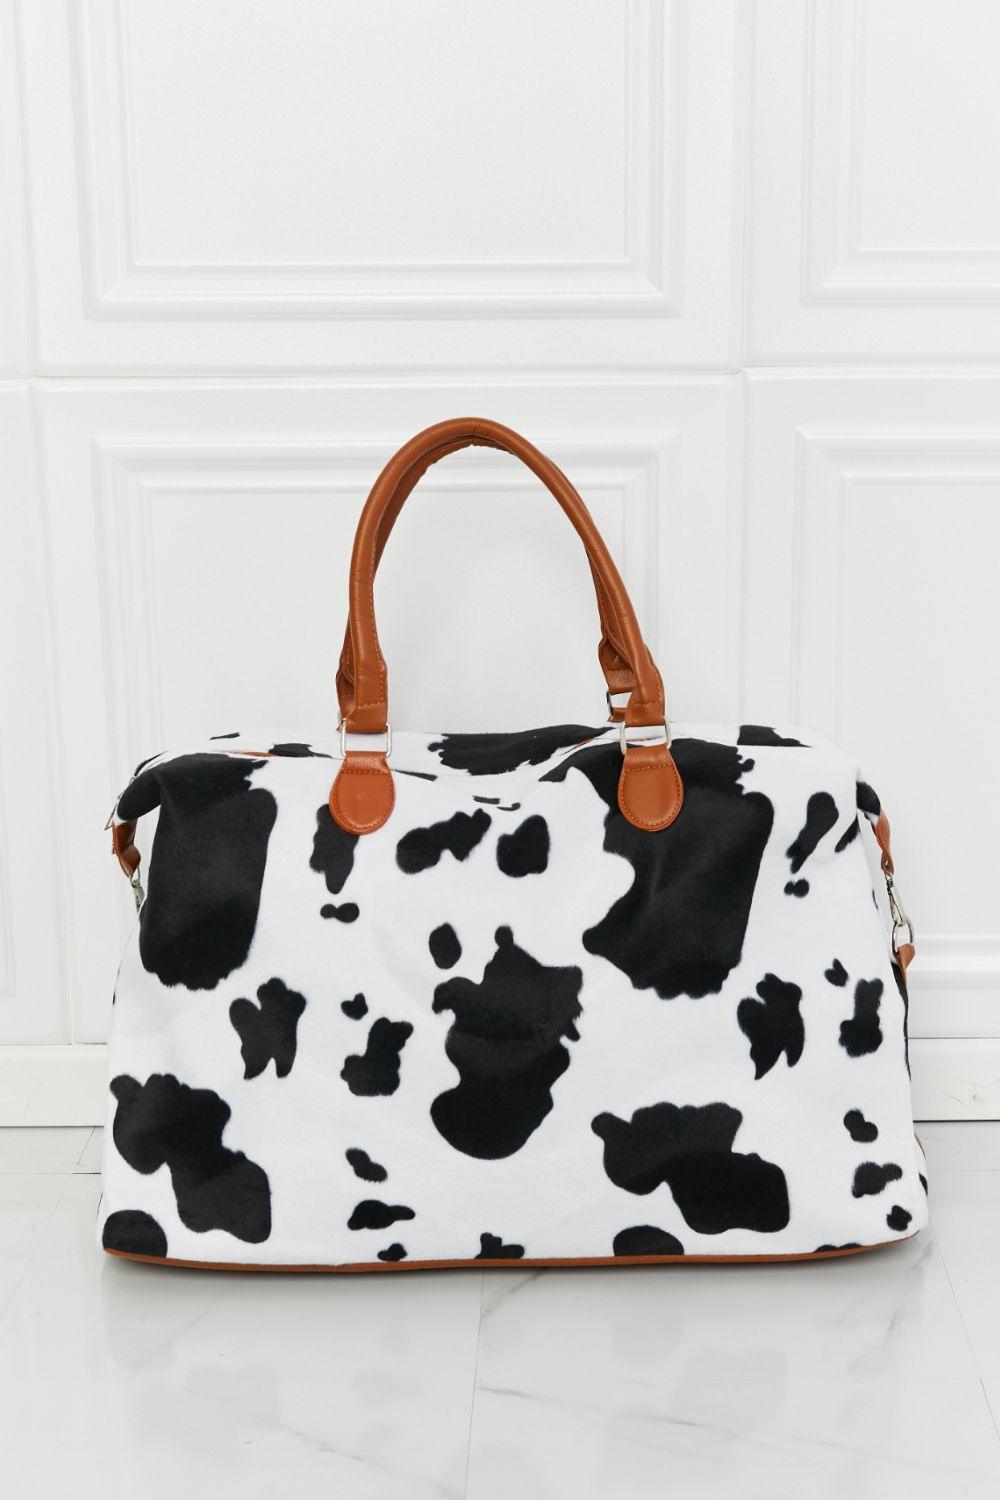 Plush Getaway Ready Cow Print Weekender Bag - MXSTUDIO.COM